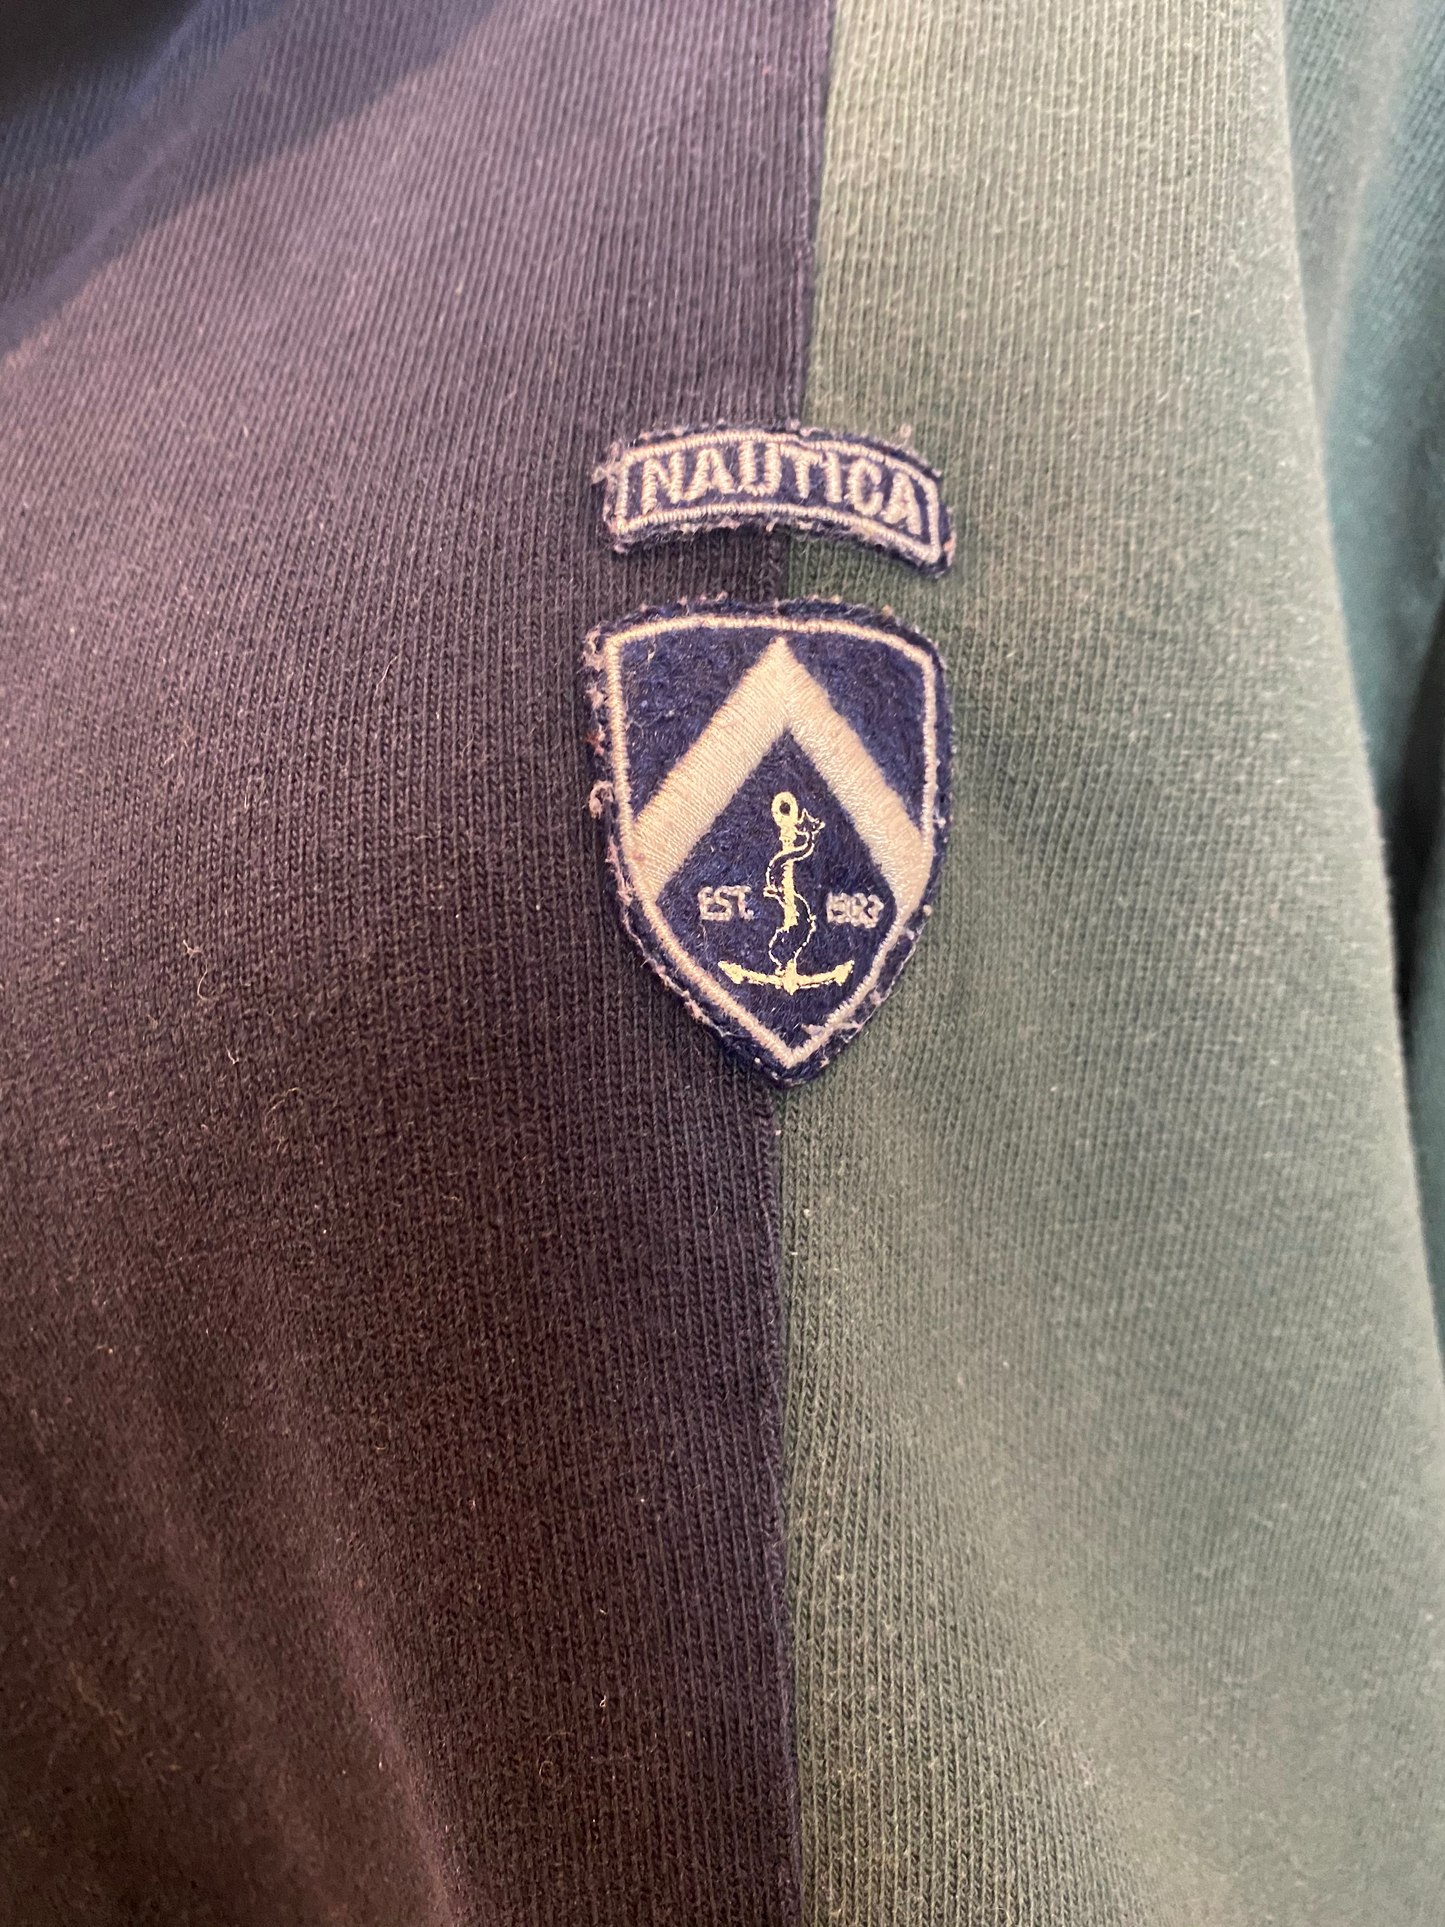 Vintage Nautica Sweatshirt, 1990's